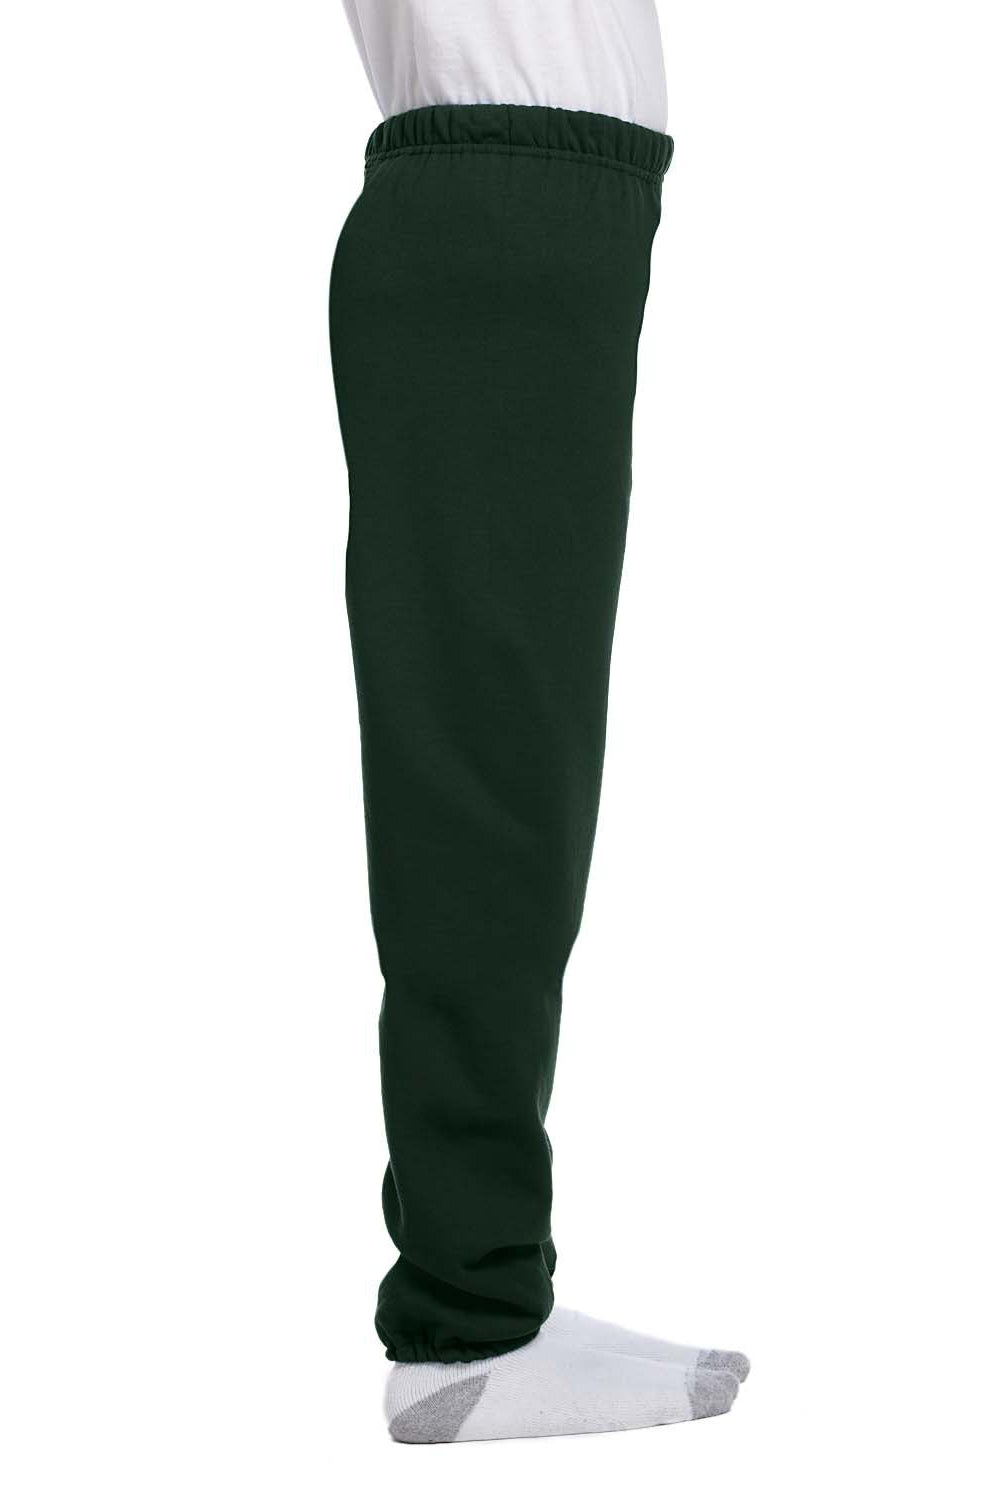 Jerzees NuBlend Sweatpants (973B) Forest Green, XL 